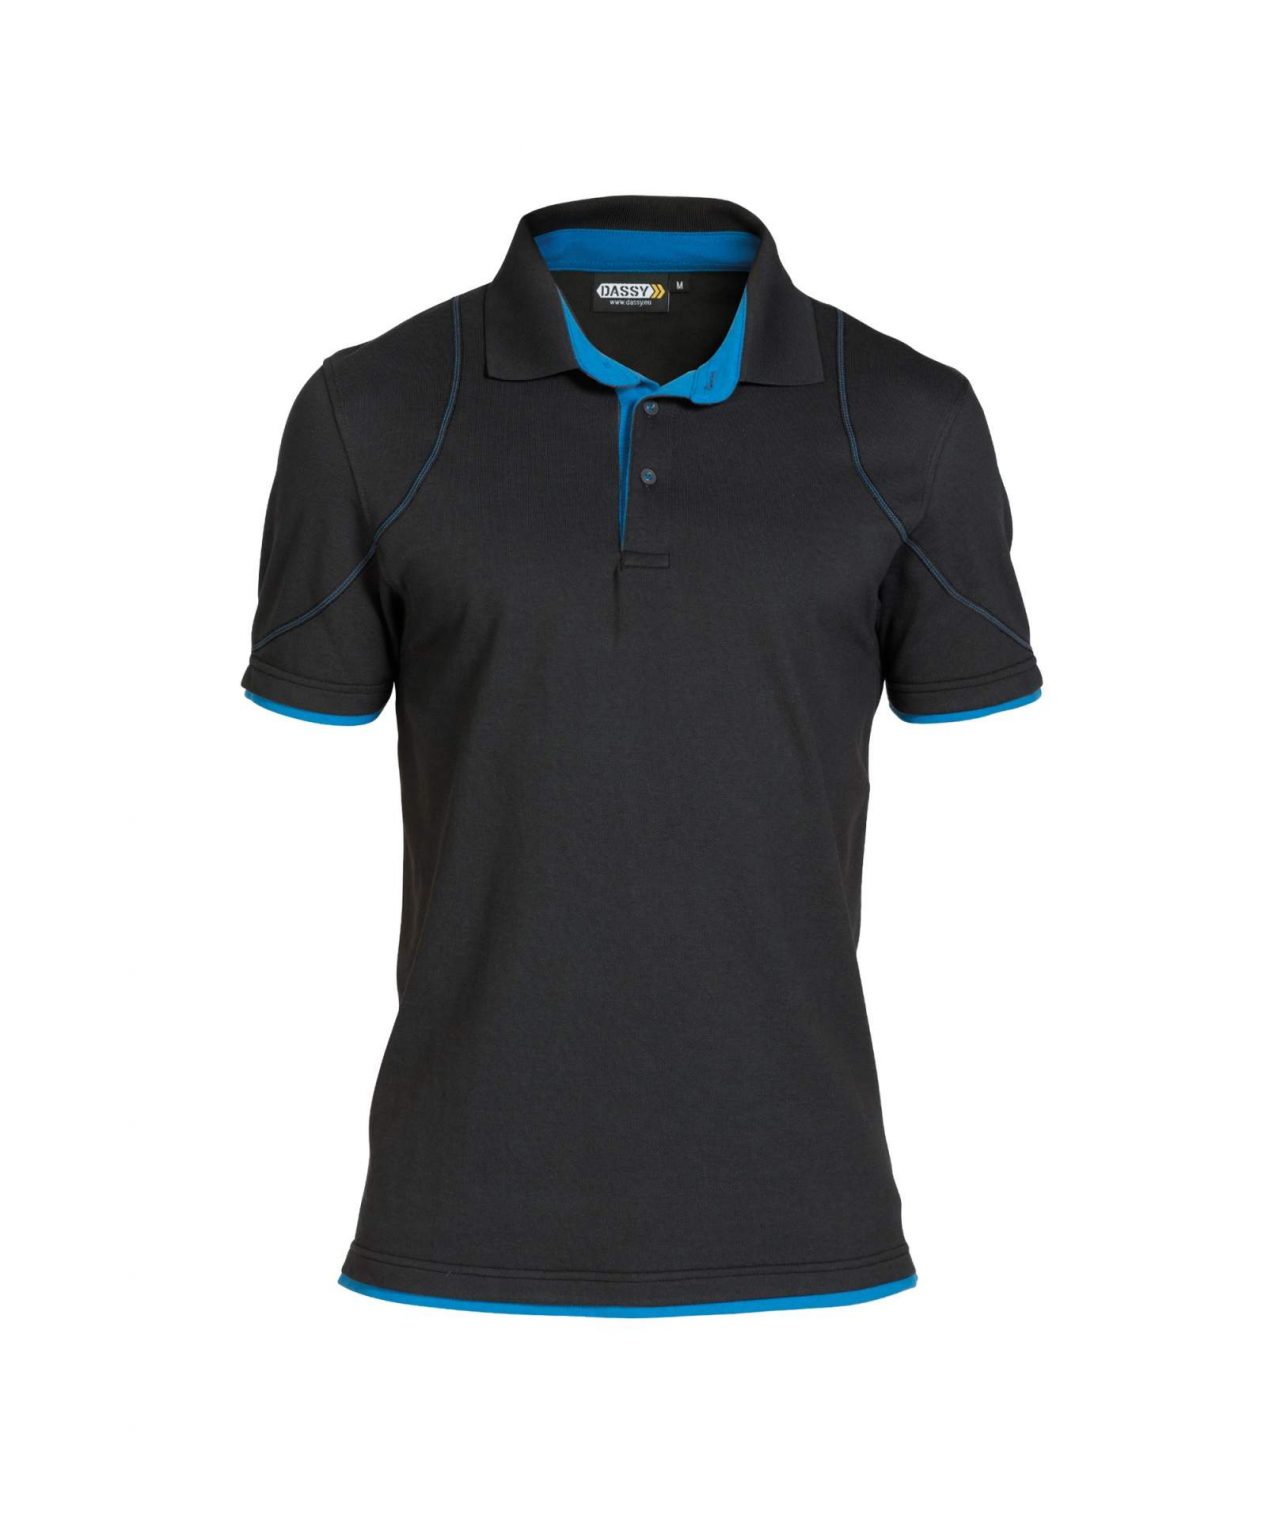 orbital polo shirt black azure blue front